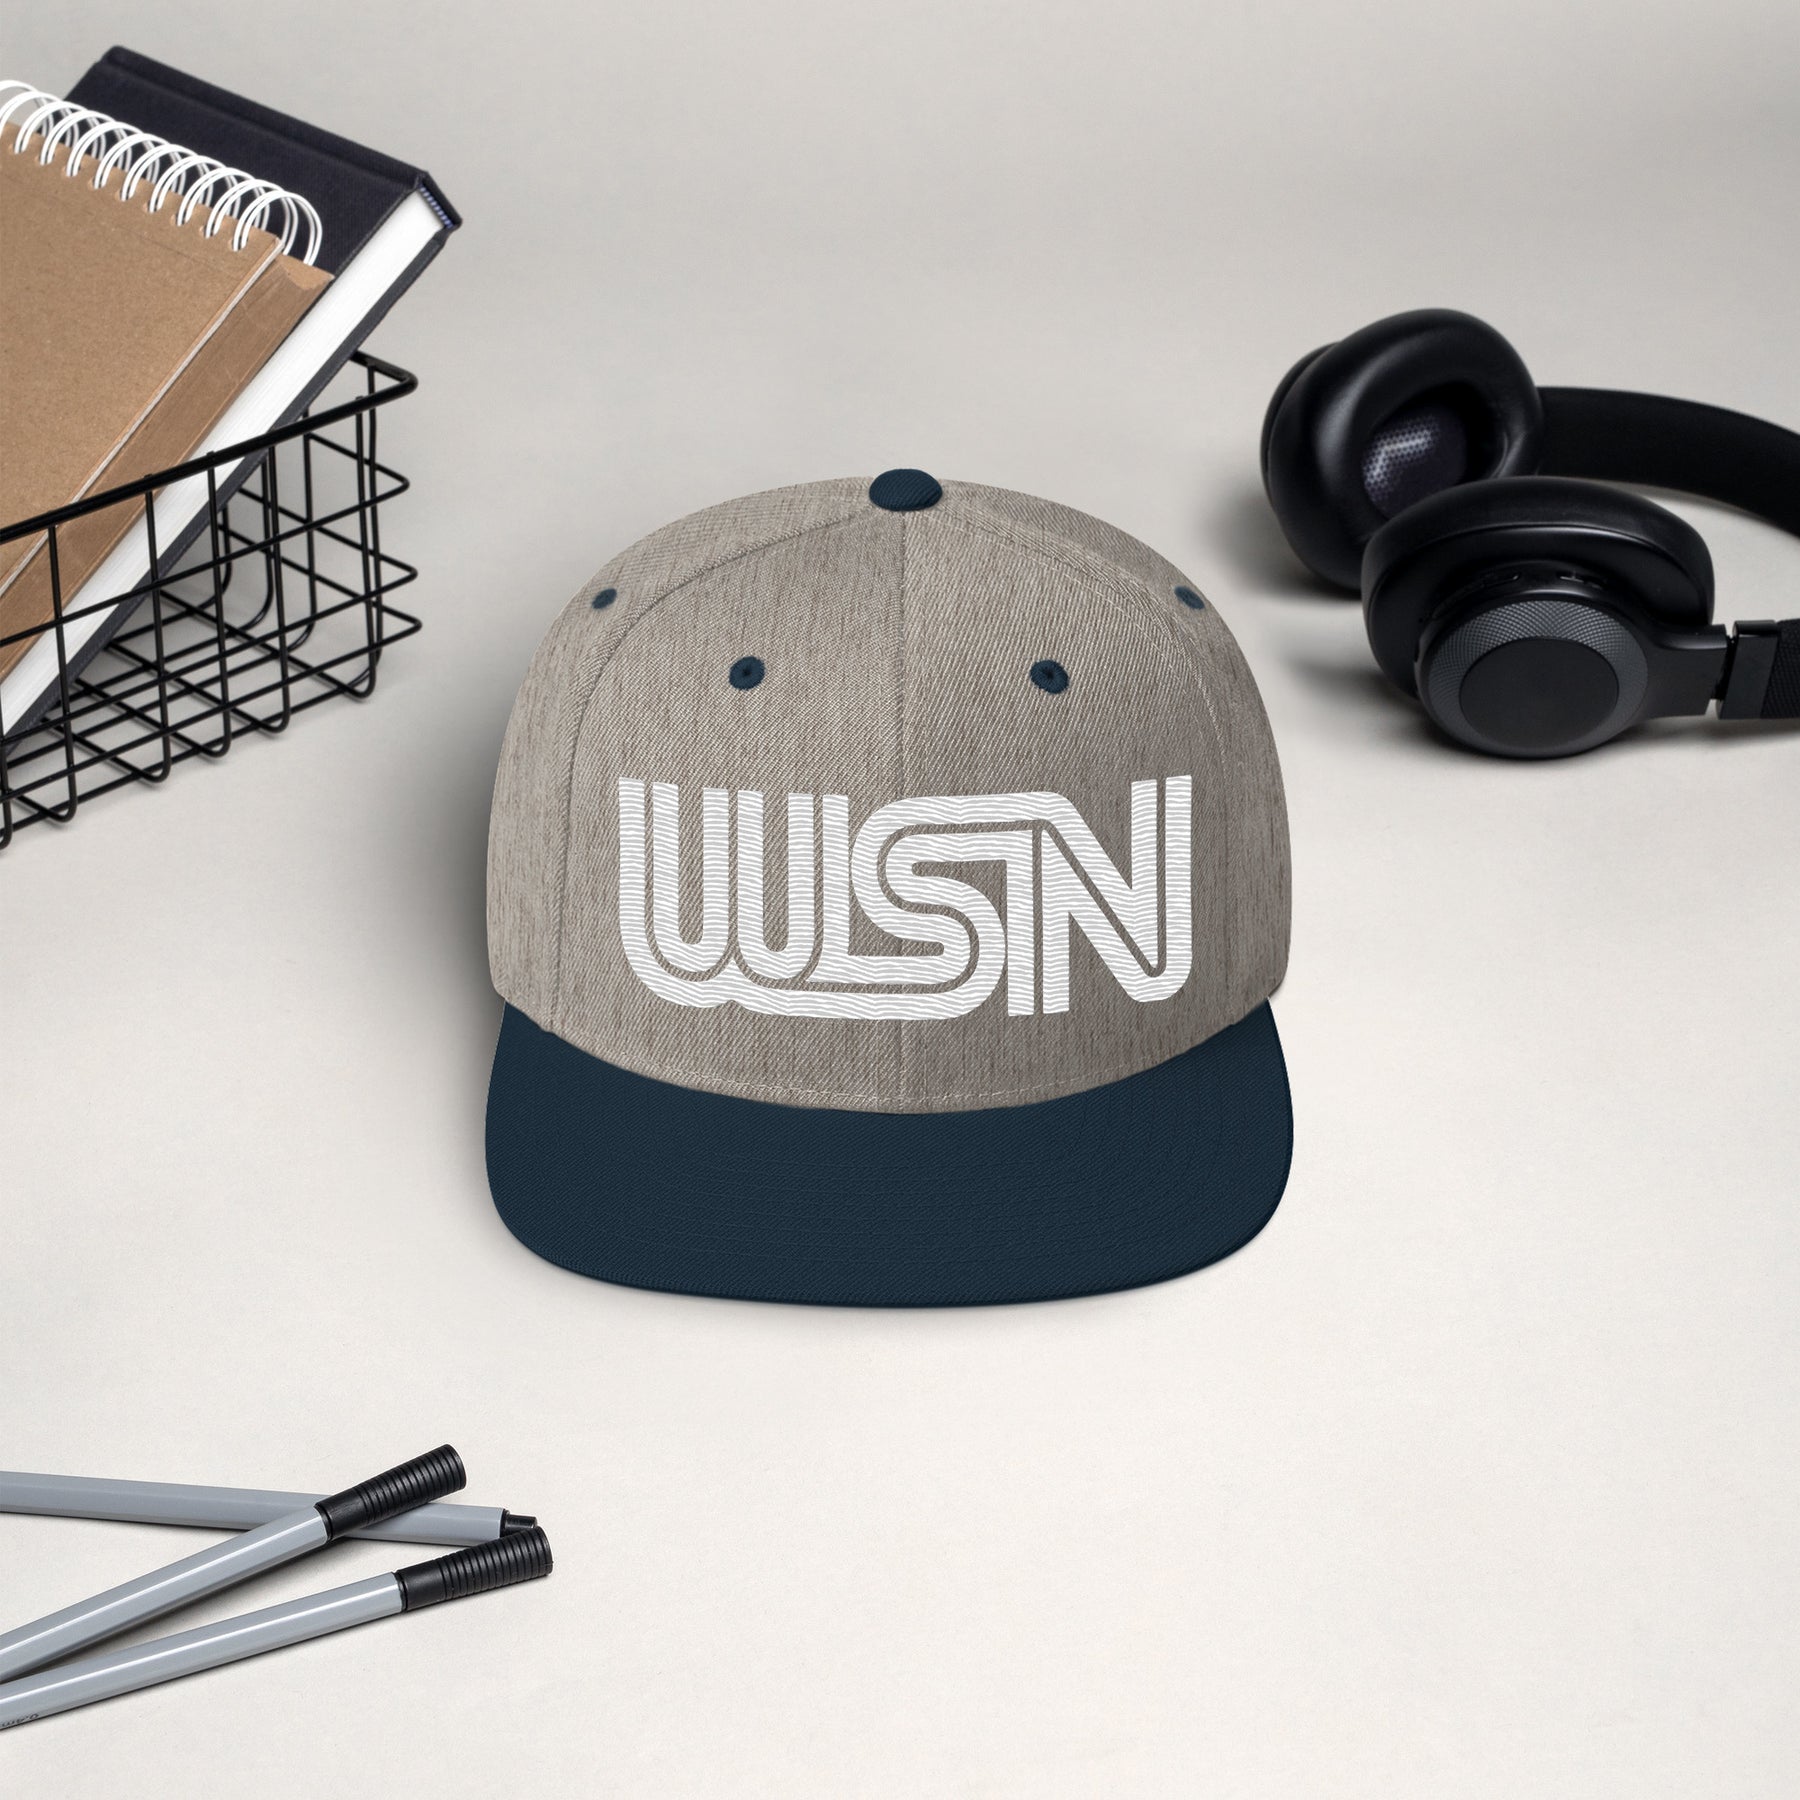 WSN "CNN" Parody Snapback Hat